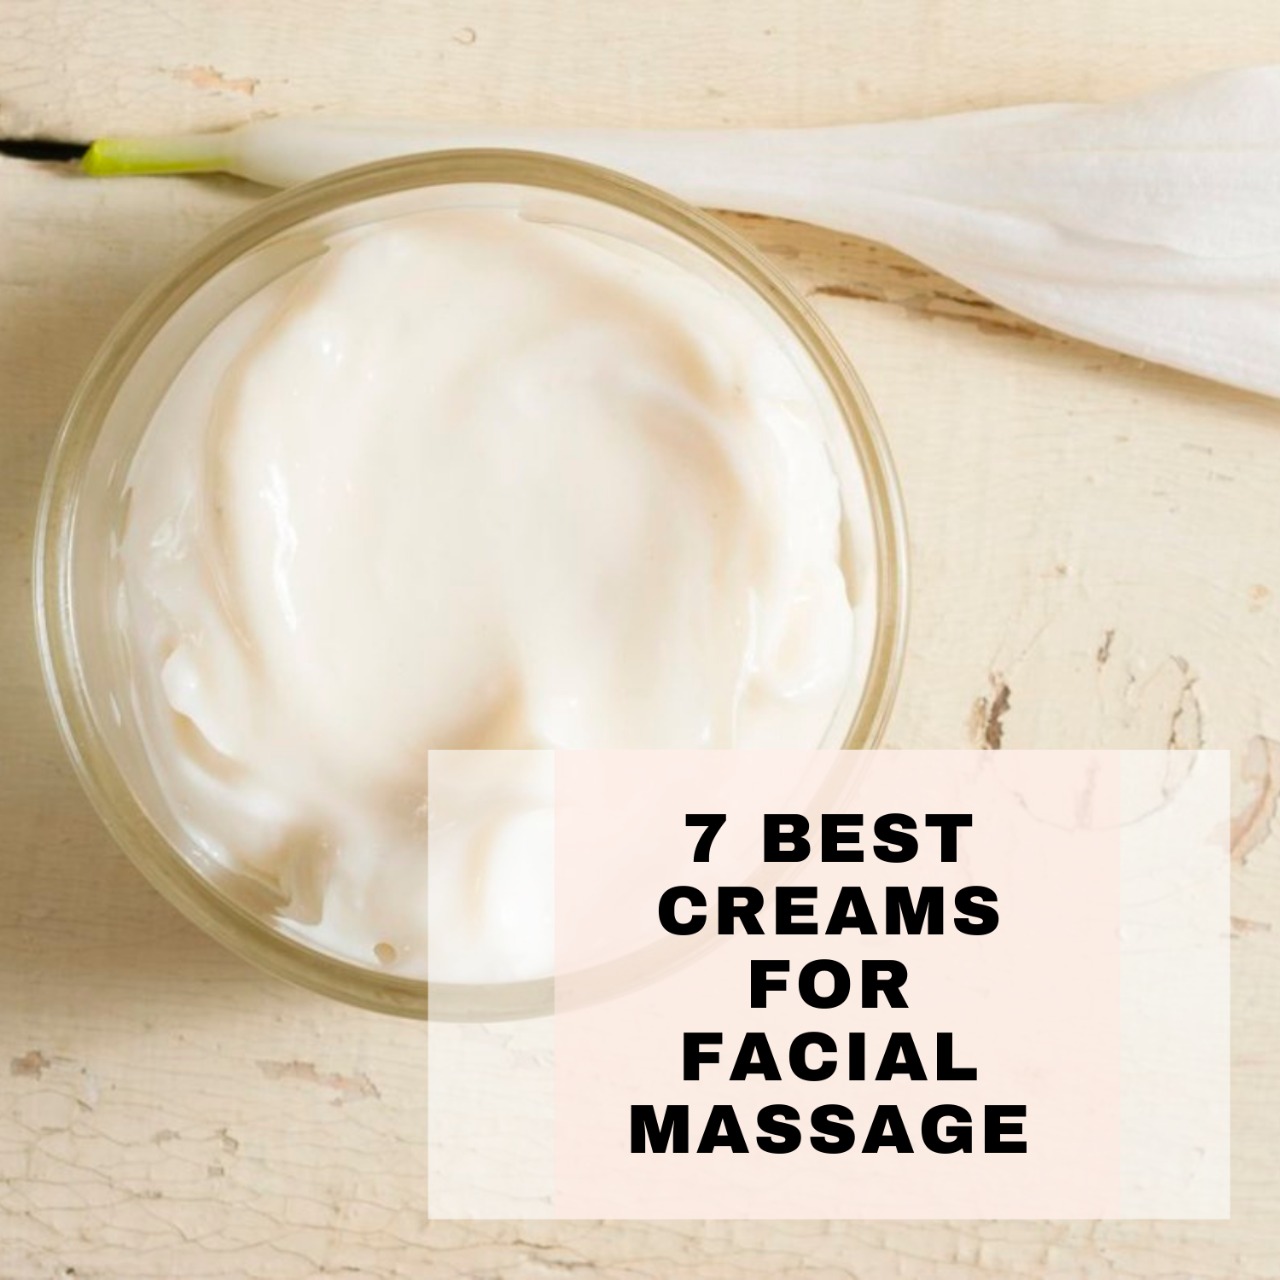 Seven best creams for facial massage 2021